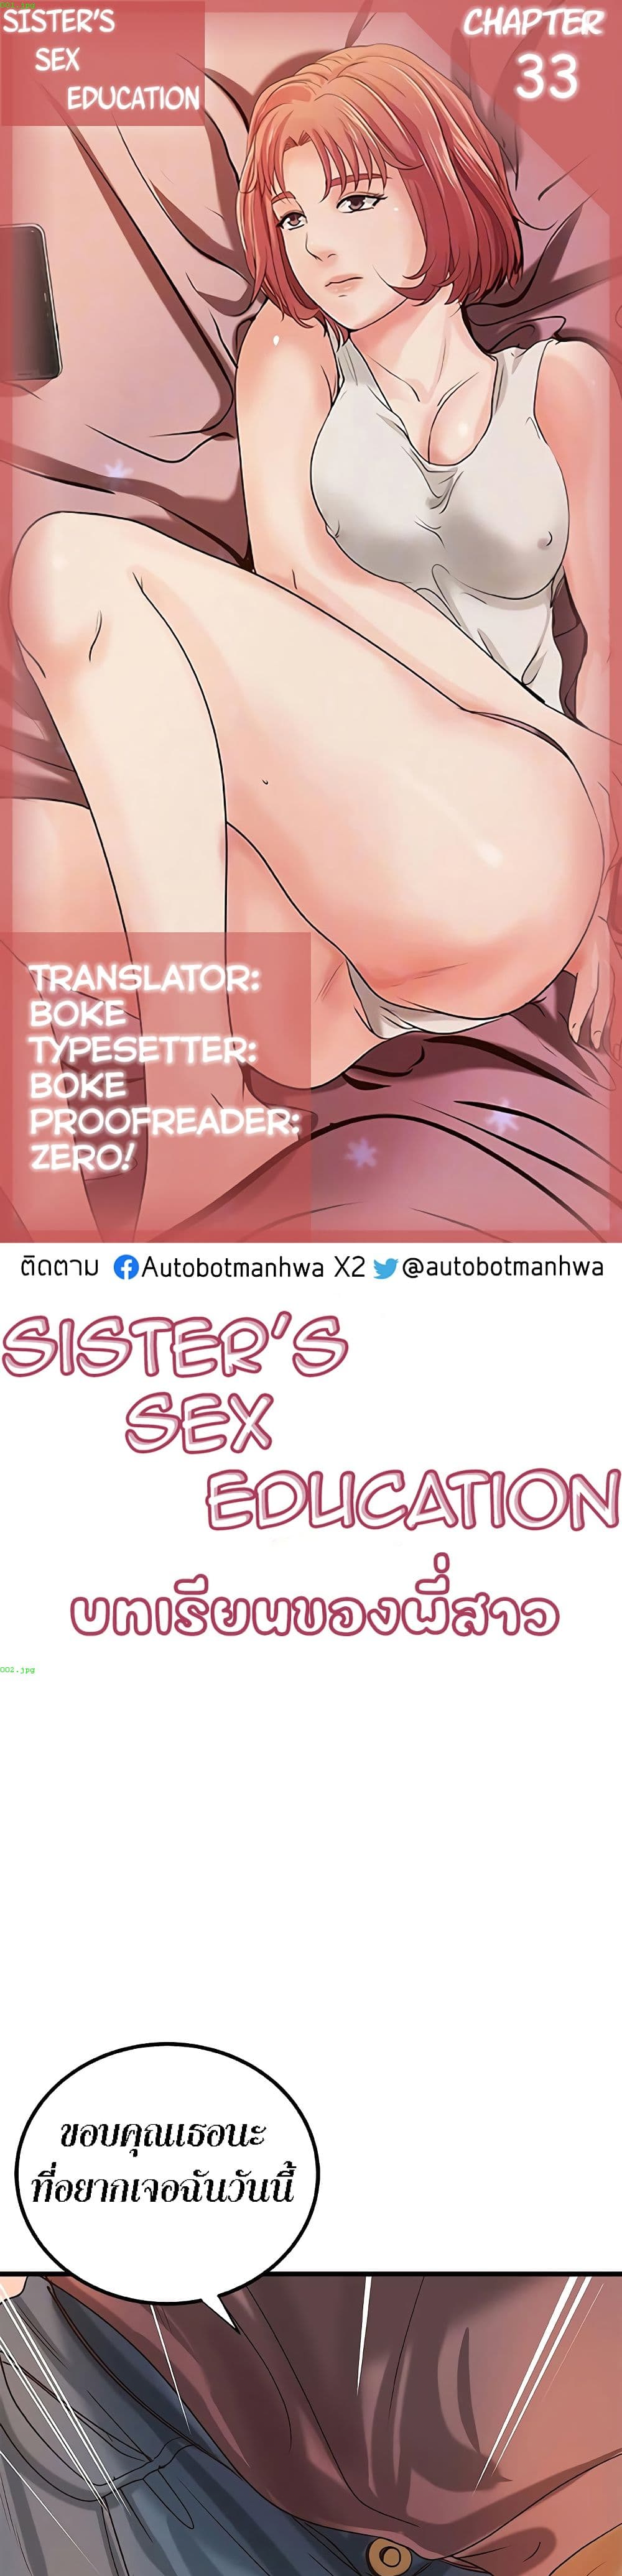 Sister's Sex Education 33-33